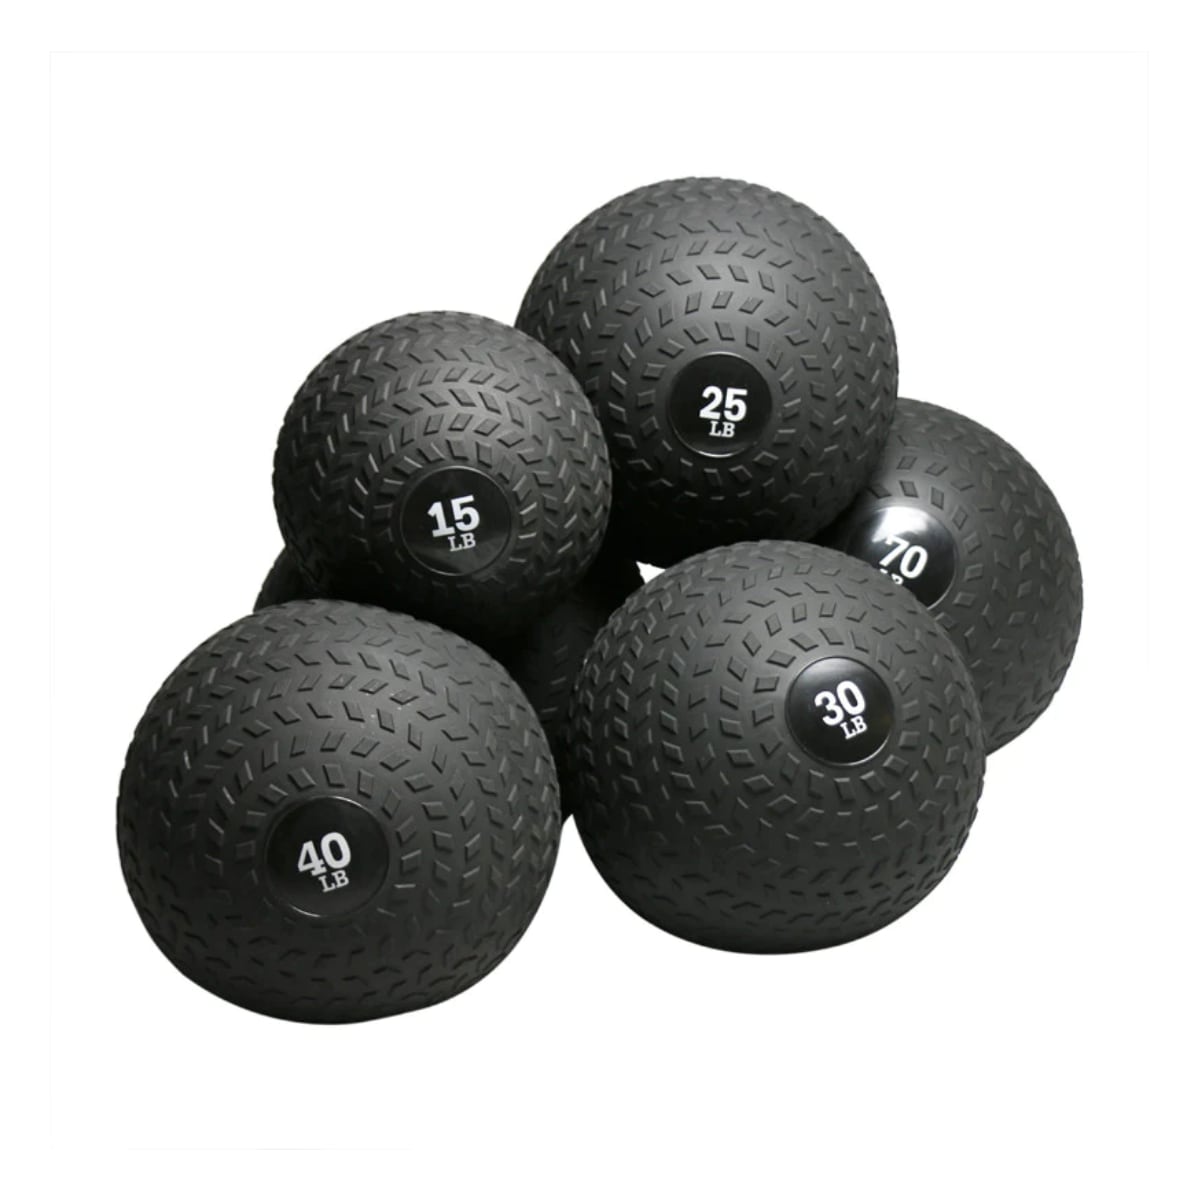 Brug American barbell AmericanBarbell Slam ball 10 lb til en forbedret oplevelse